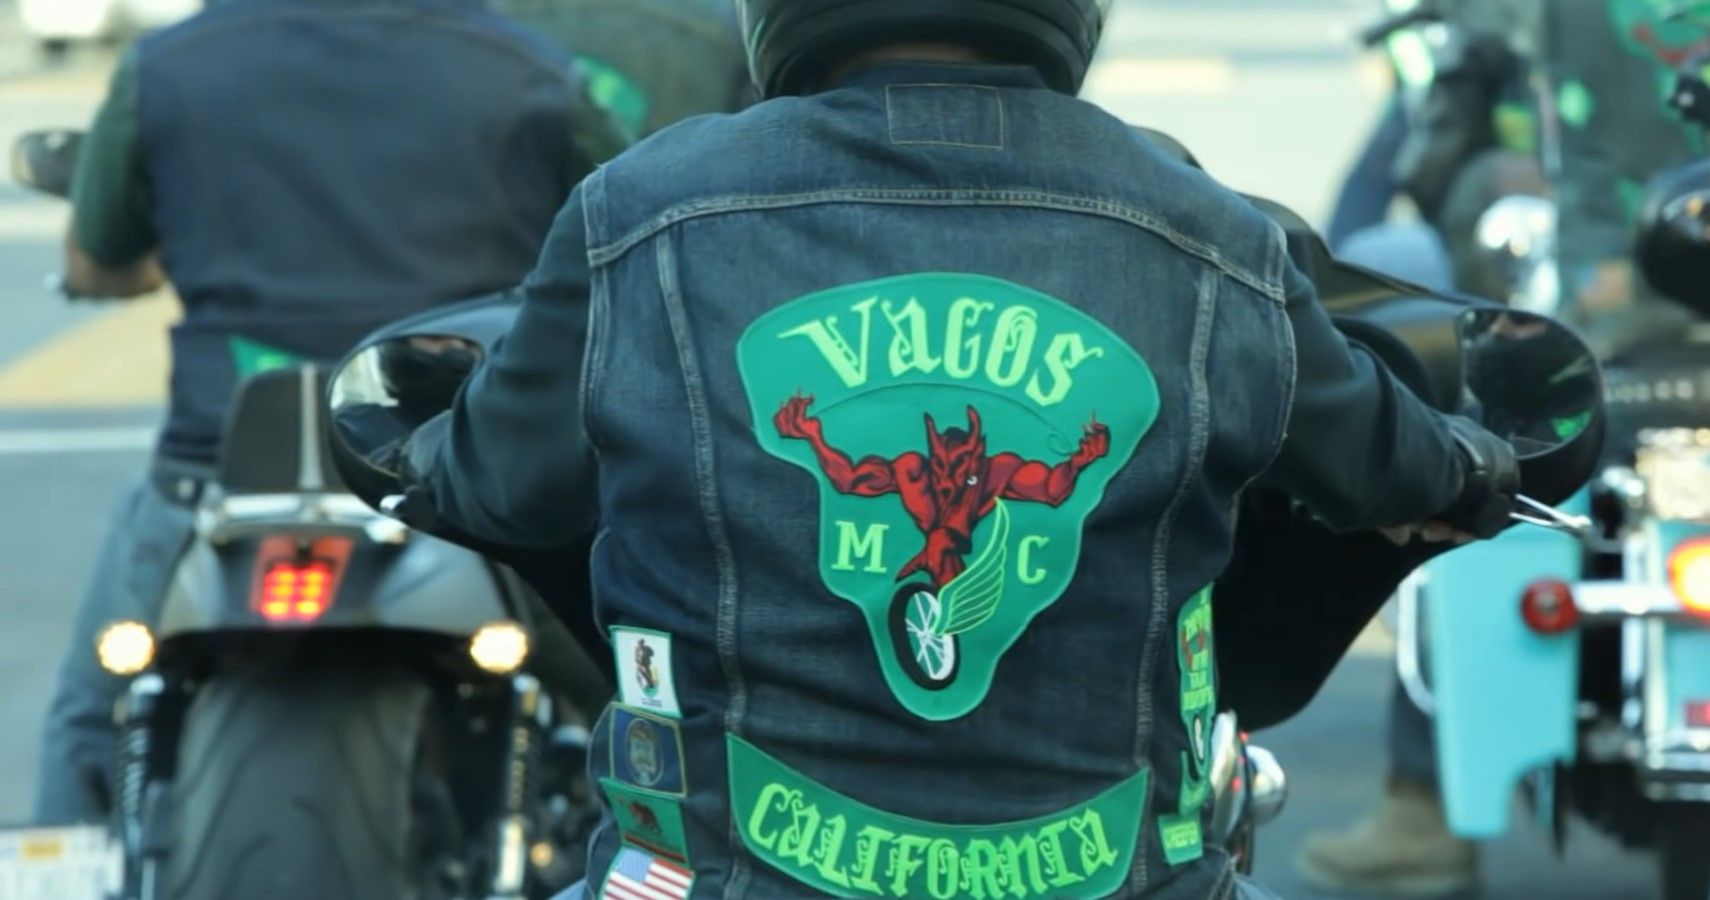 Vagos Motorcycle Club logo on denin jacket